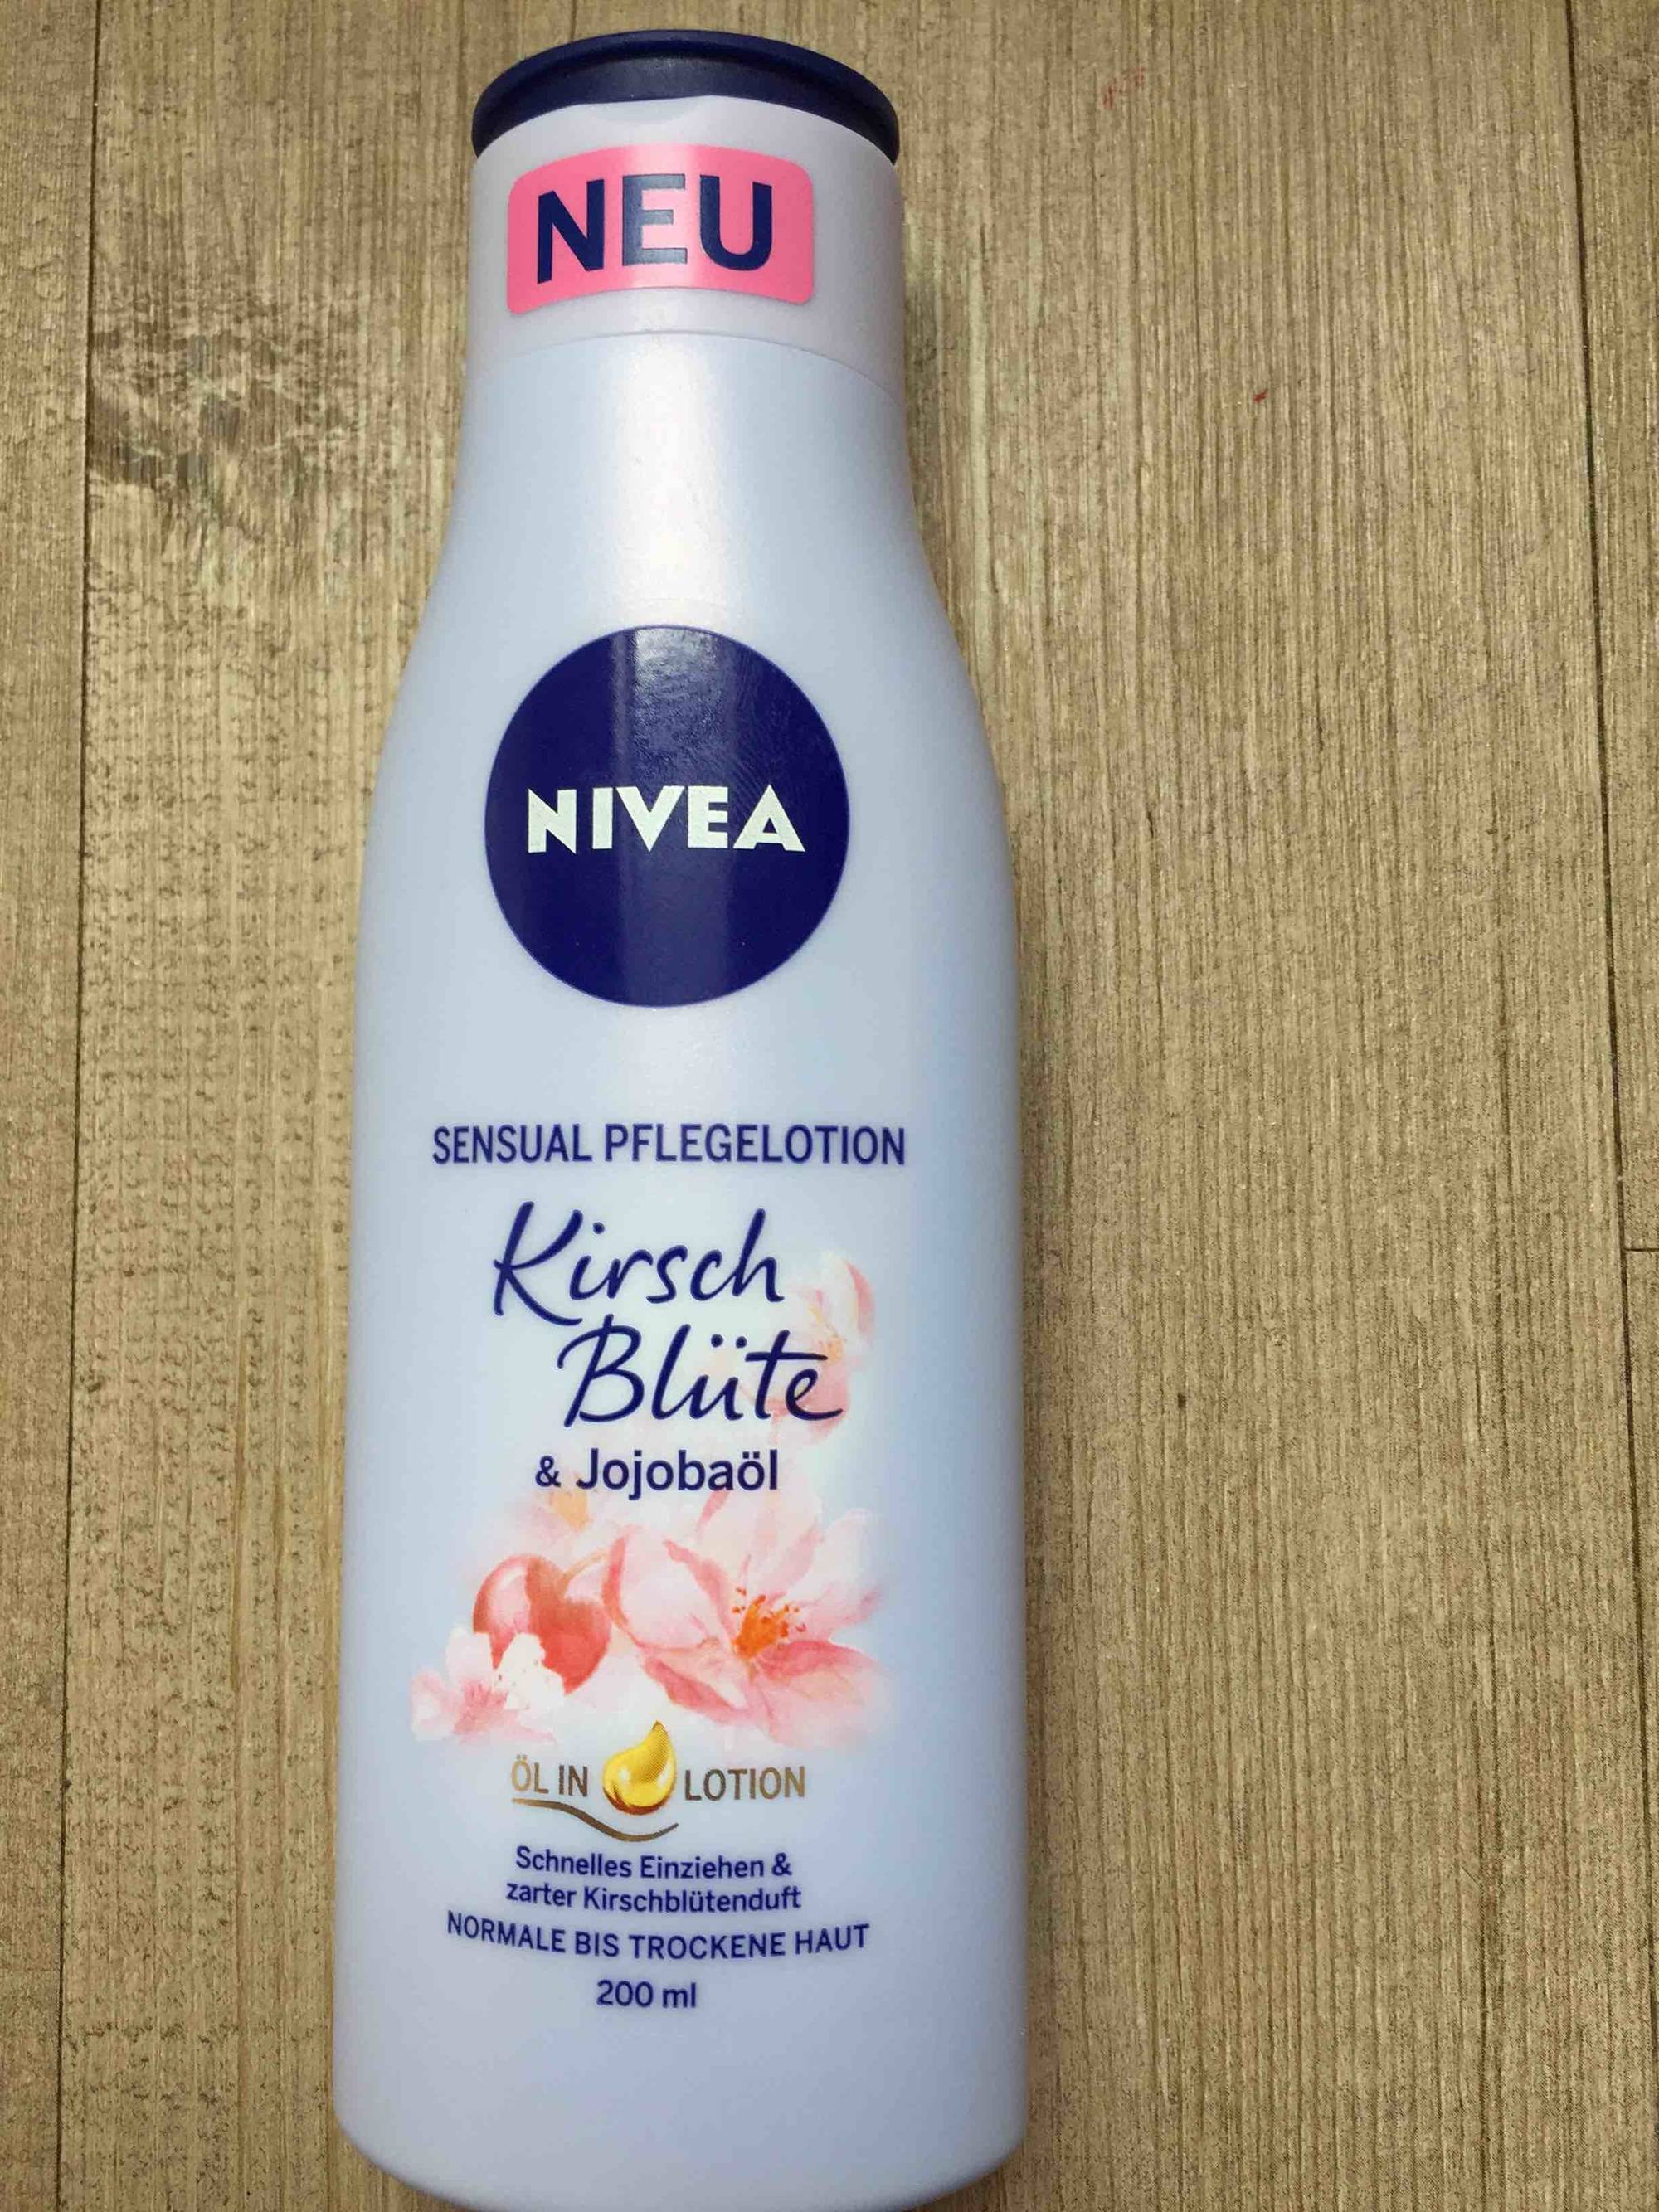 NIVEA - Sensual pflegelotion kirsch blüte & jojobaöl